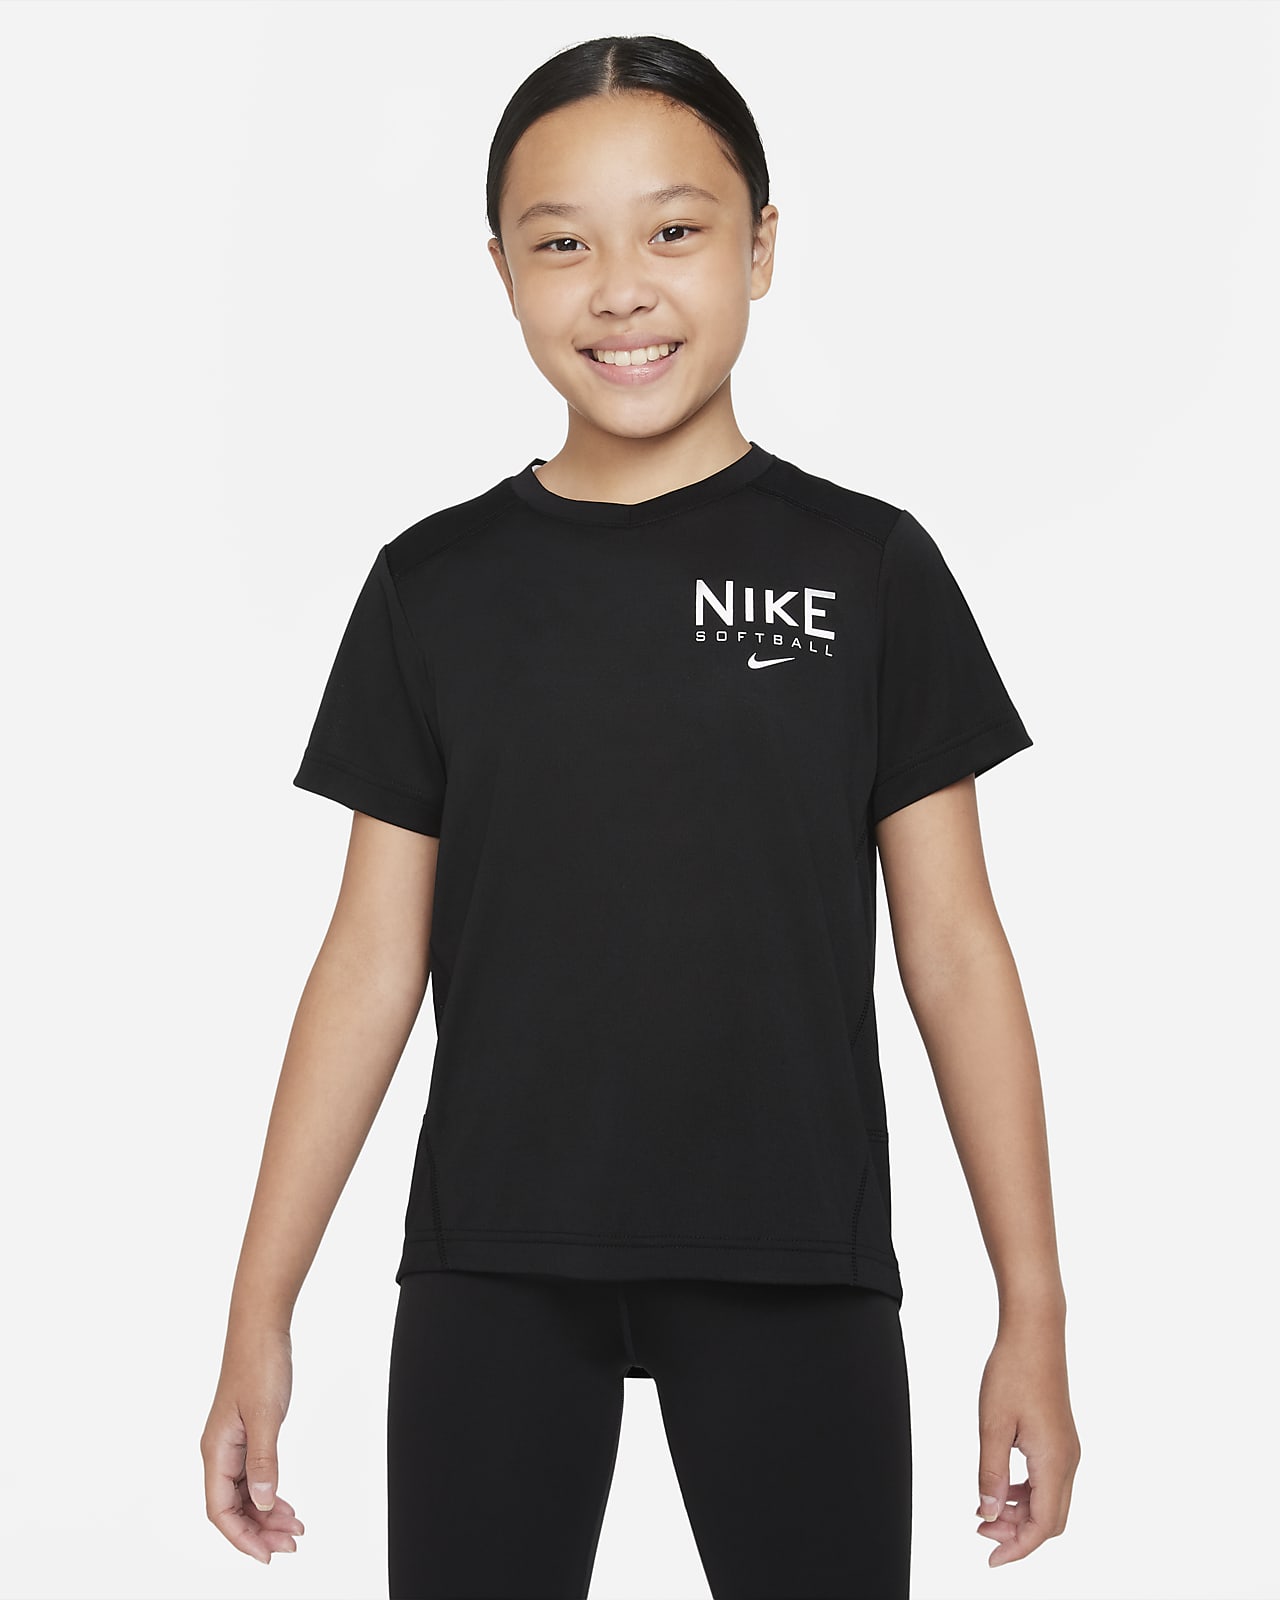 Big Softball Practice Nike Kids\' Short-Sleeve Top. Dri-FIT (Girls\')